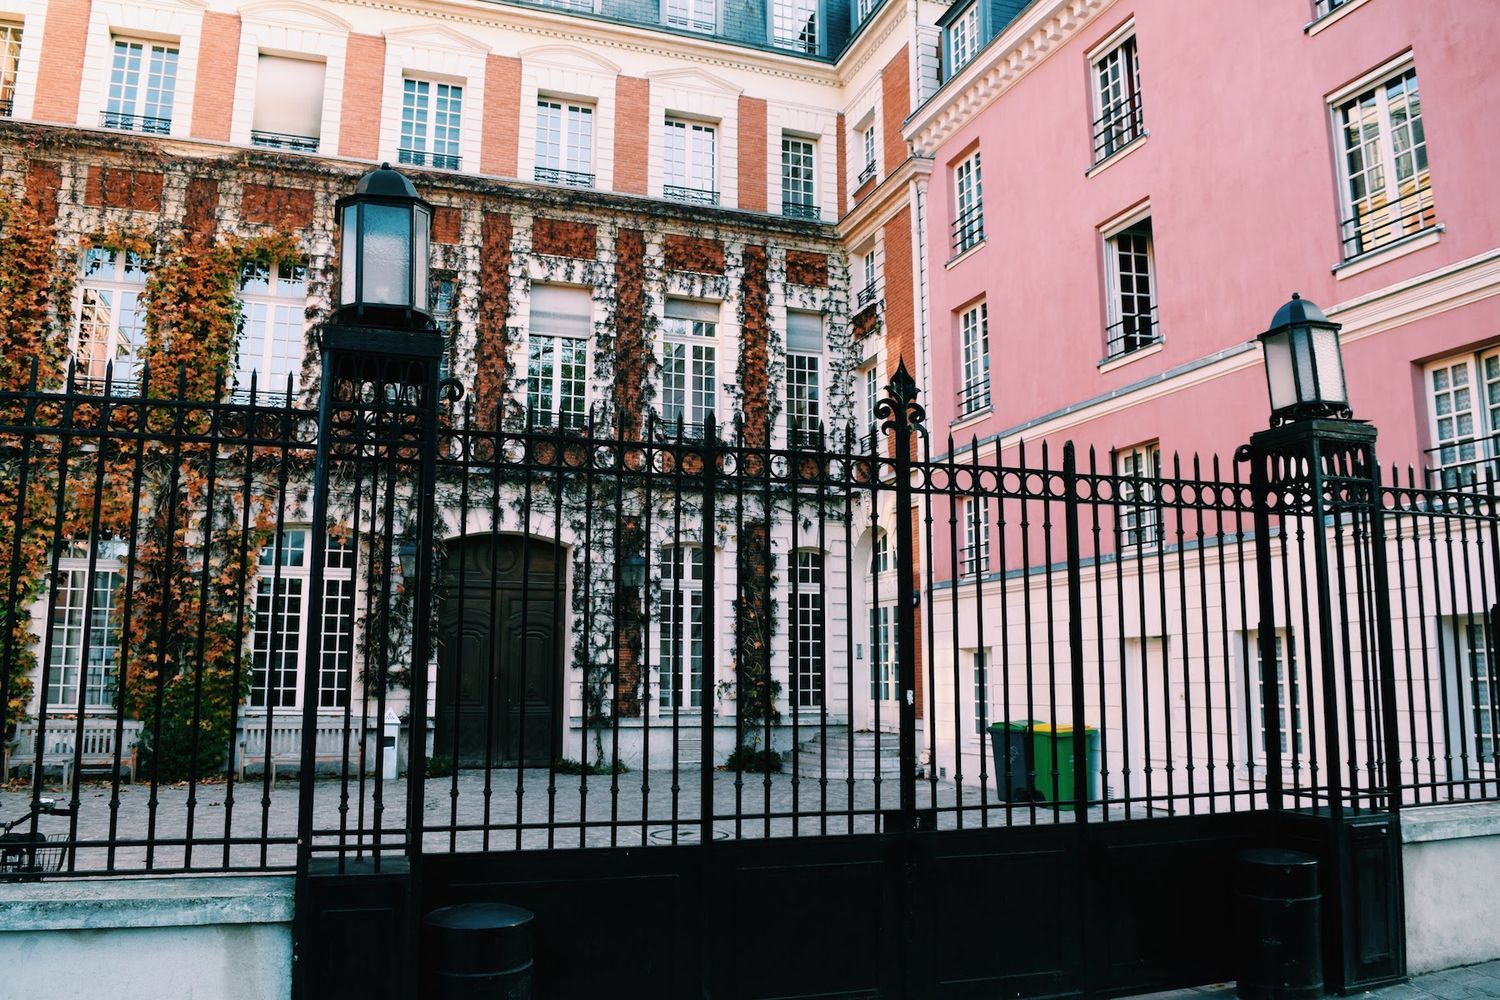 Institut Historique Allemand: a pink building in the Marais